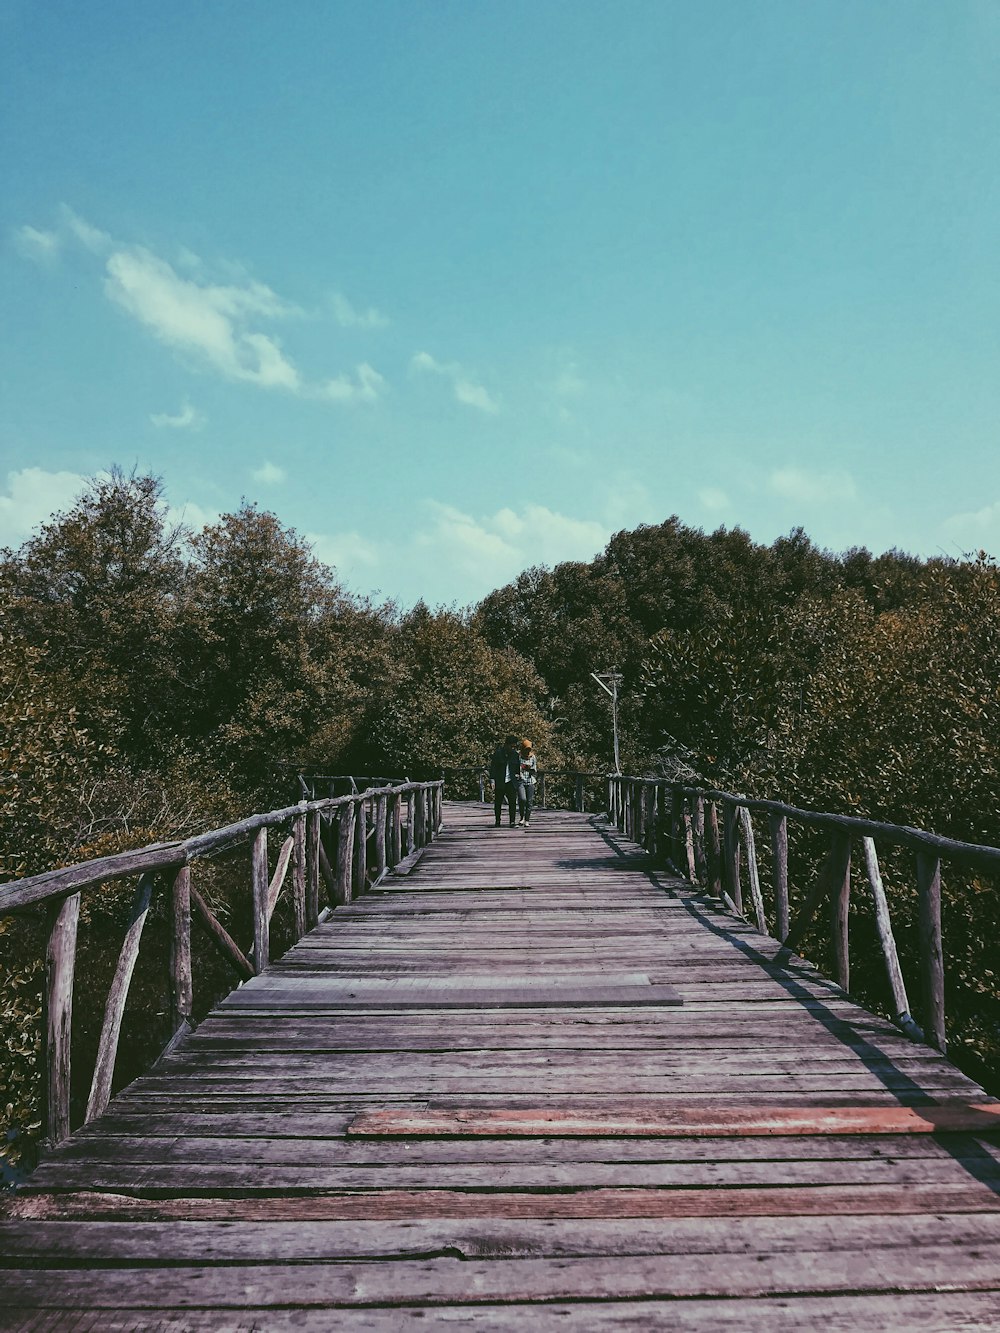 a wooden bridge with people walking on it